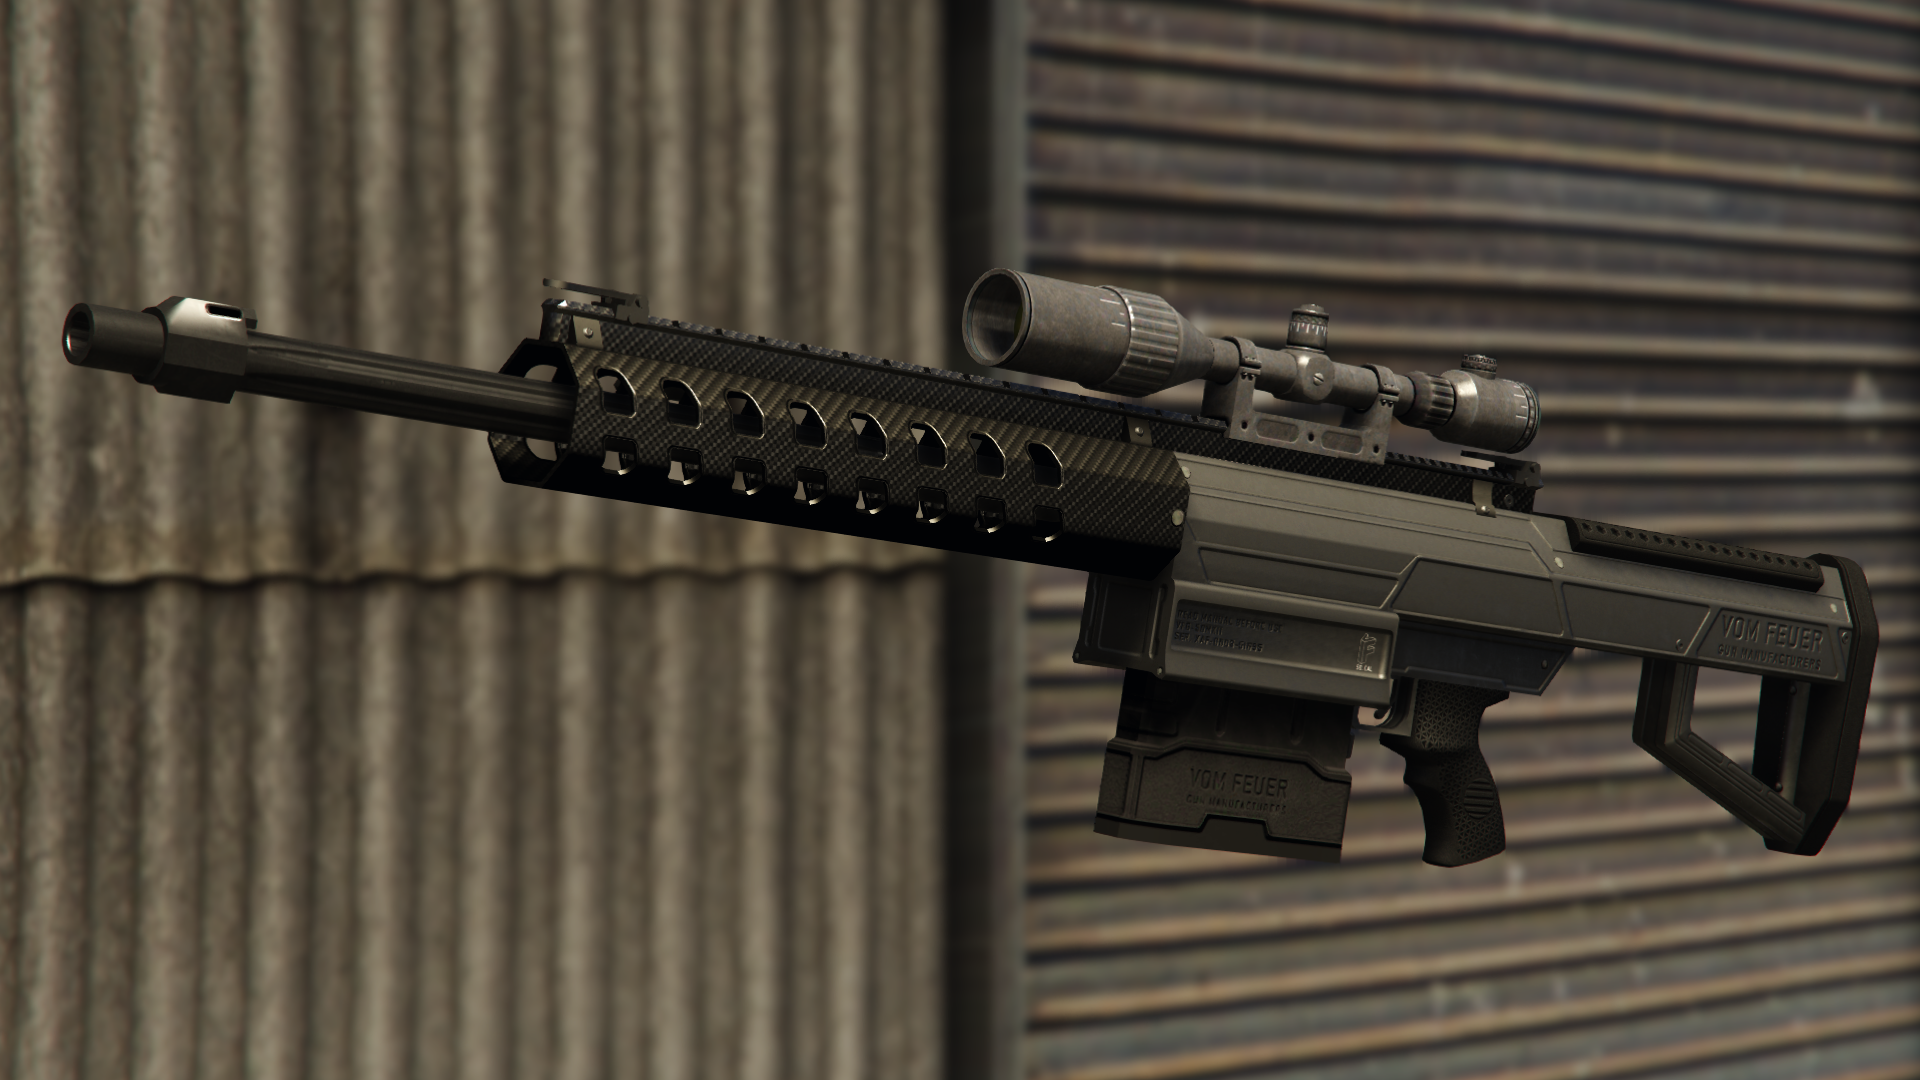 gta online gunrunning mk 2 weapons upgrade list